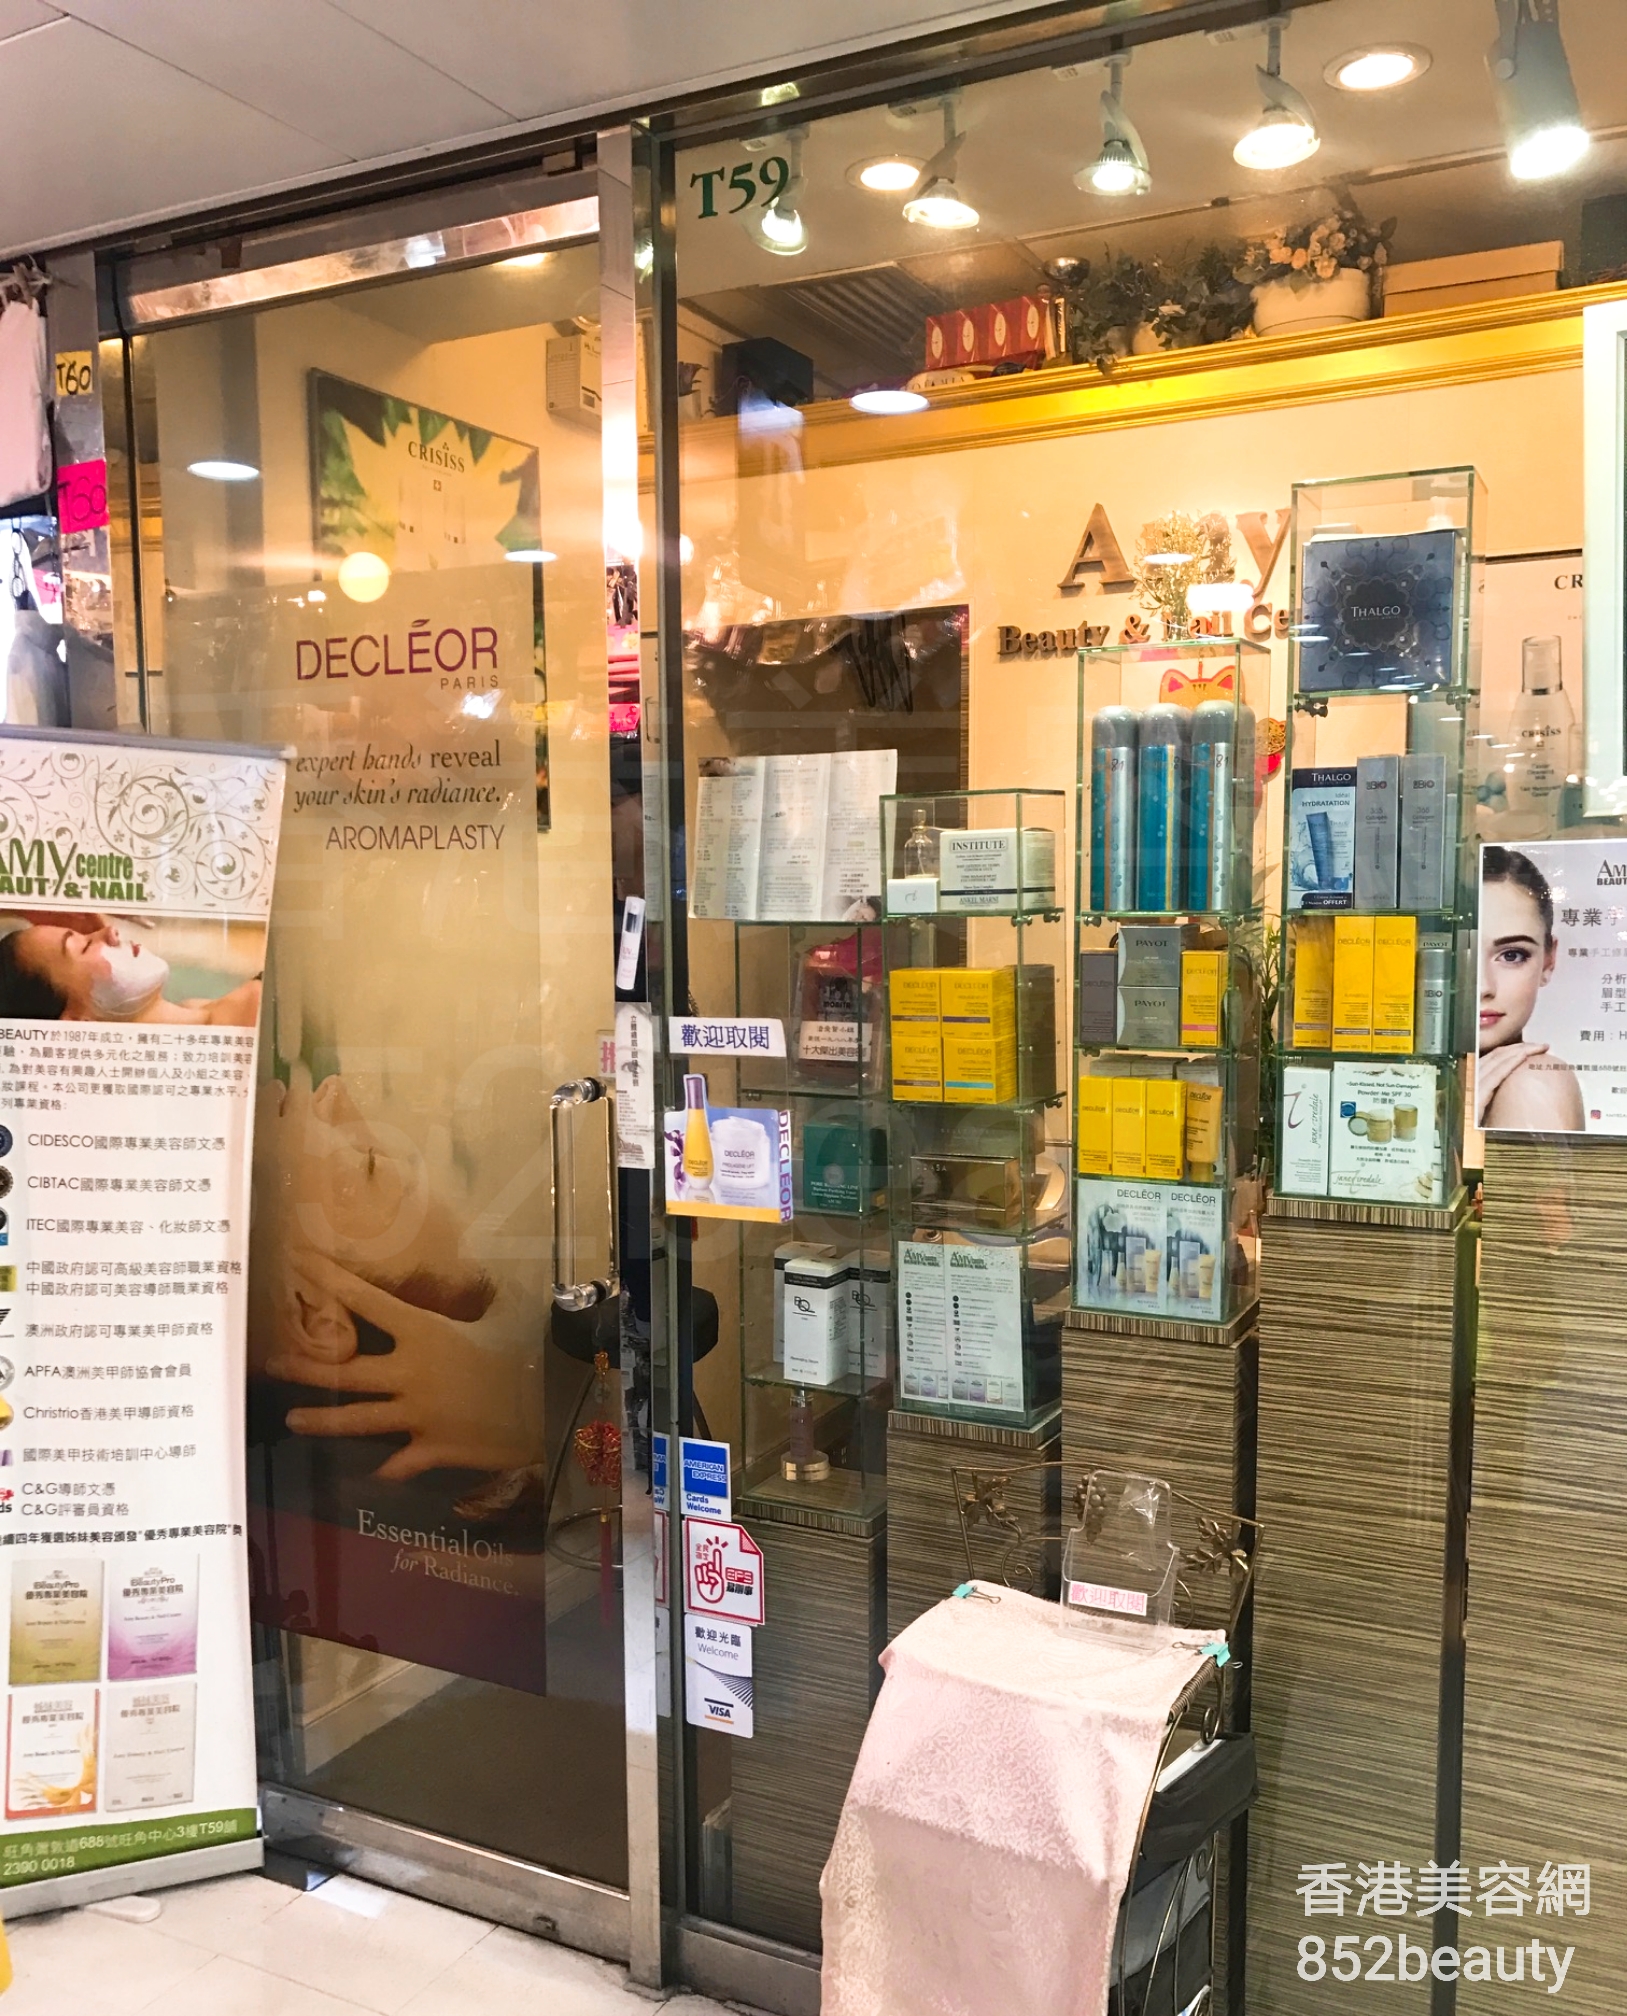 香港美容網 Hong Kong Beauty Salon 美容院 / 美容師: Amy Centre Beauty & Nail